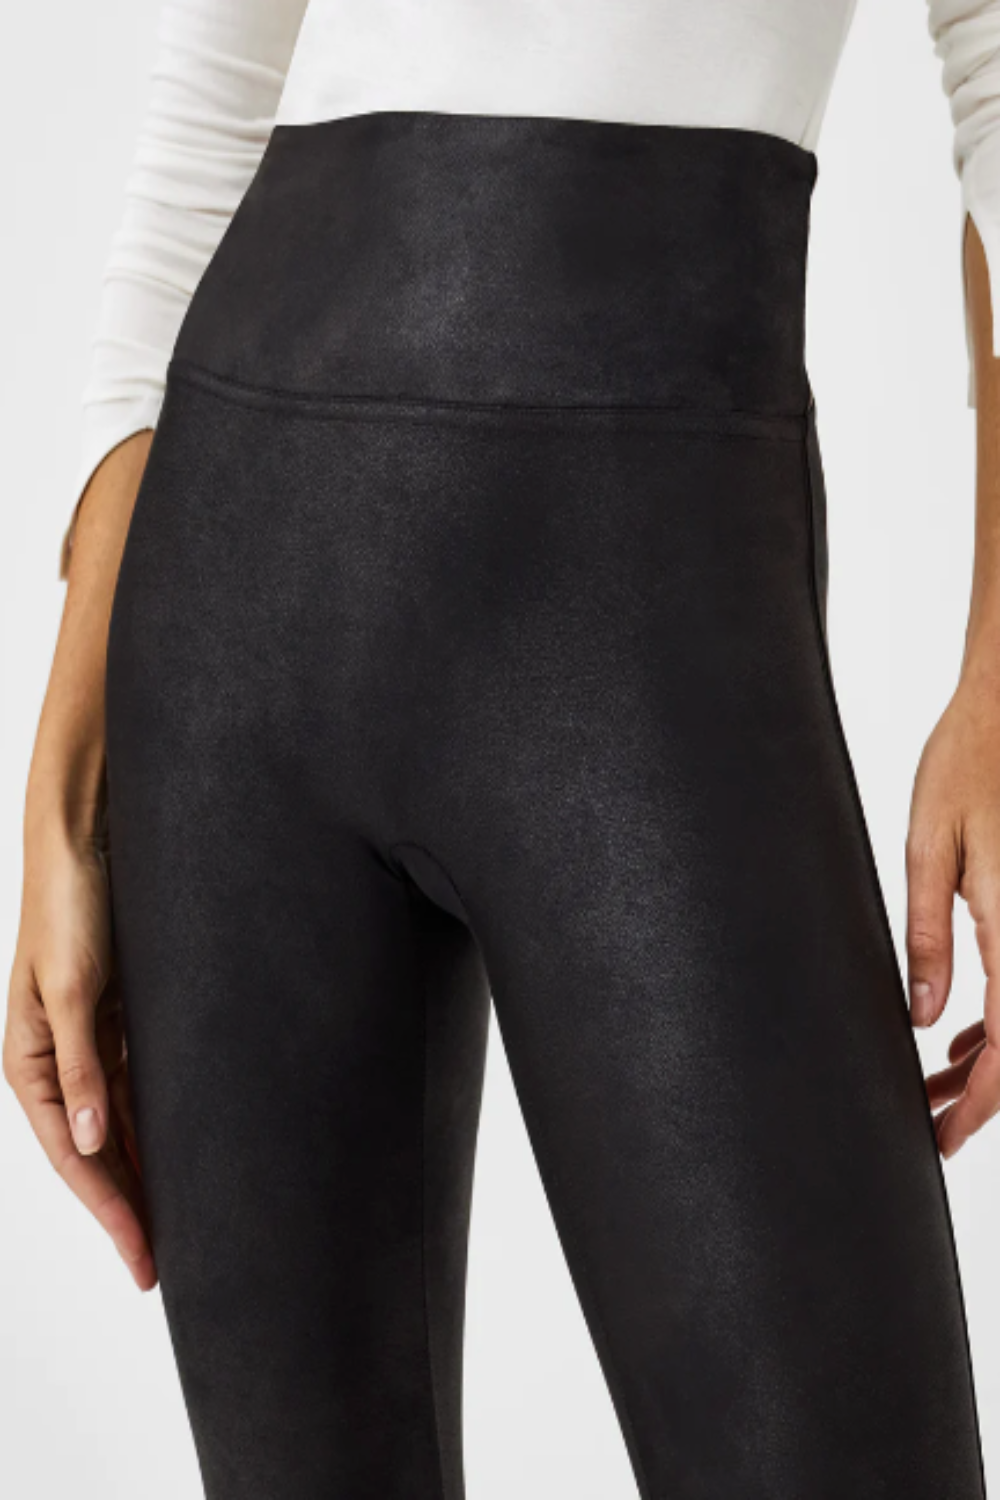 NWOT fleece lined vegan leather legging black Size XS